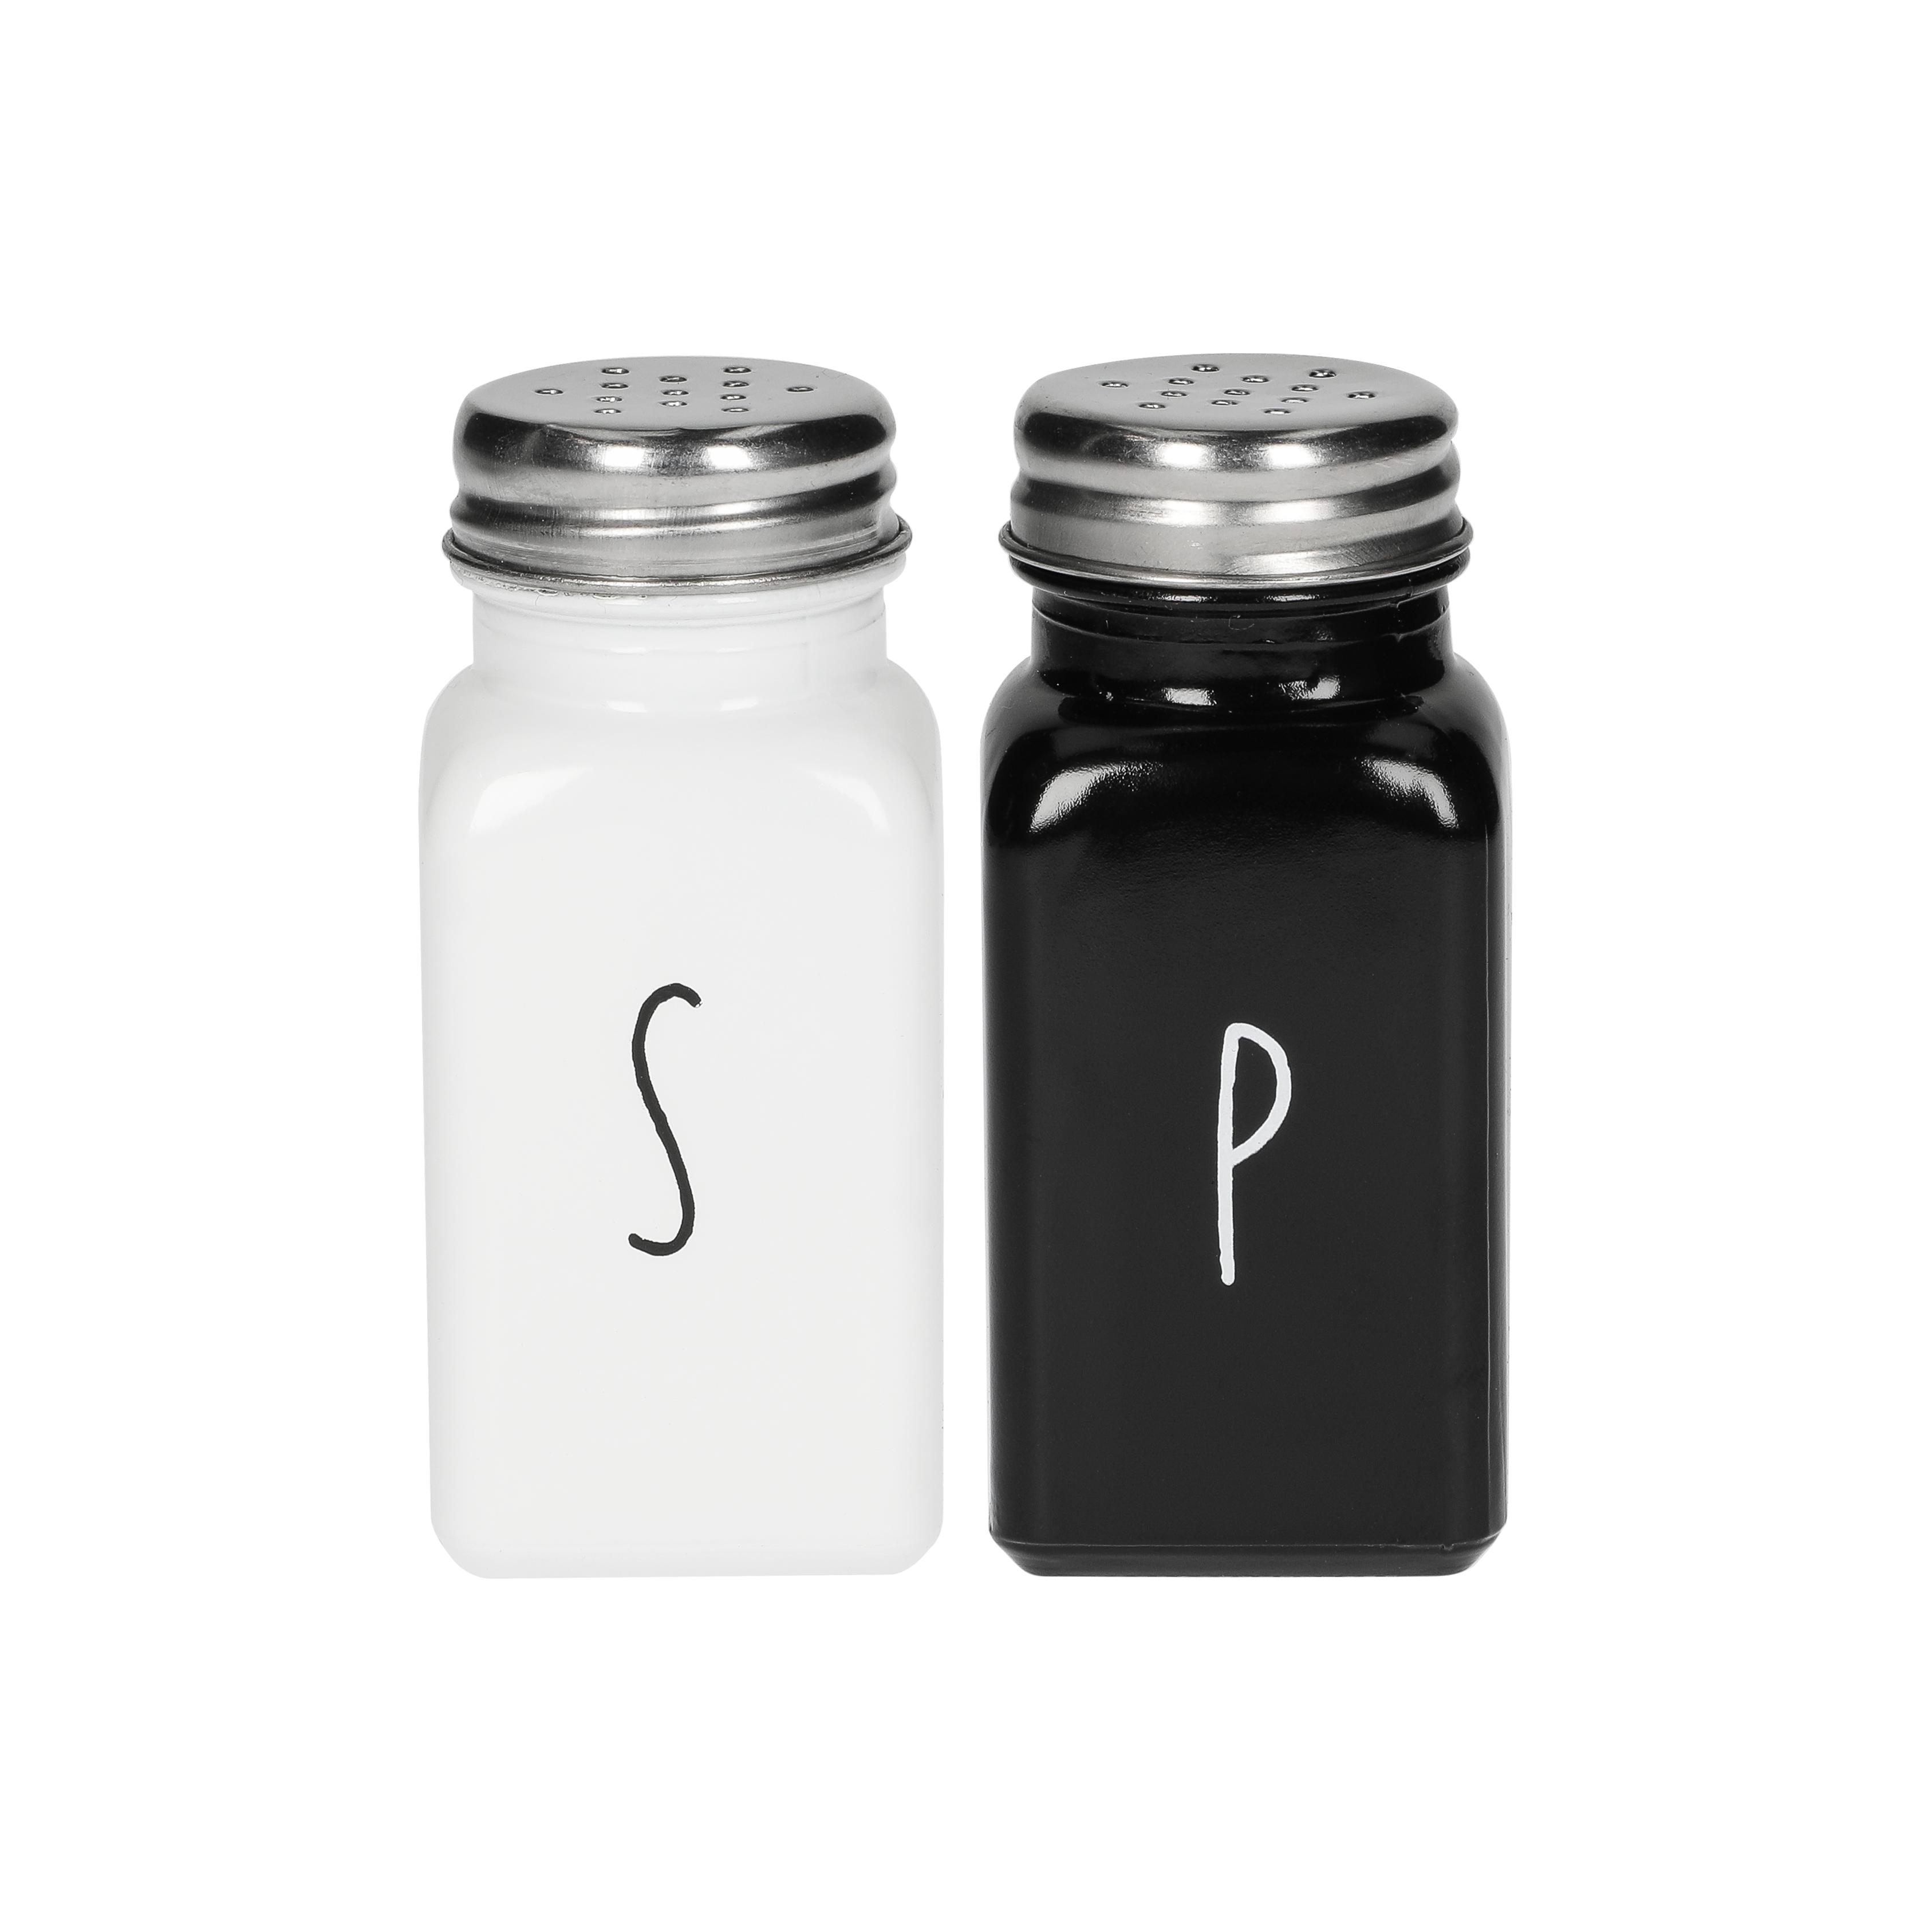 Salt and pepper set 